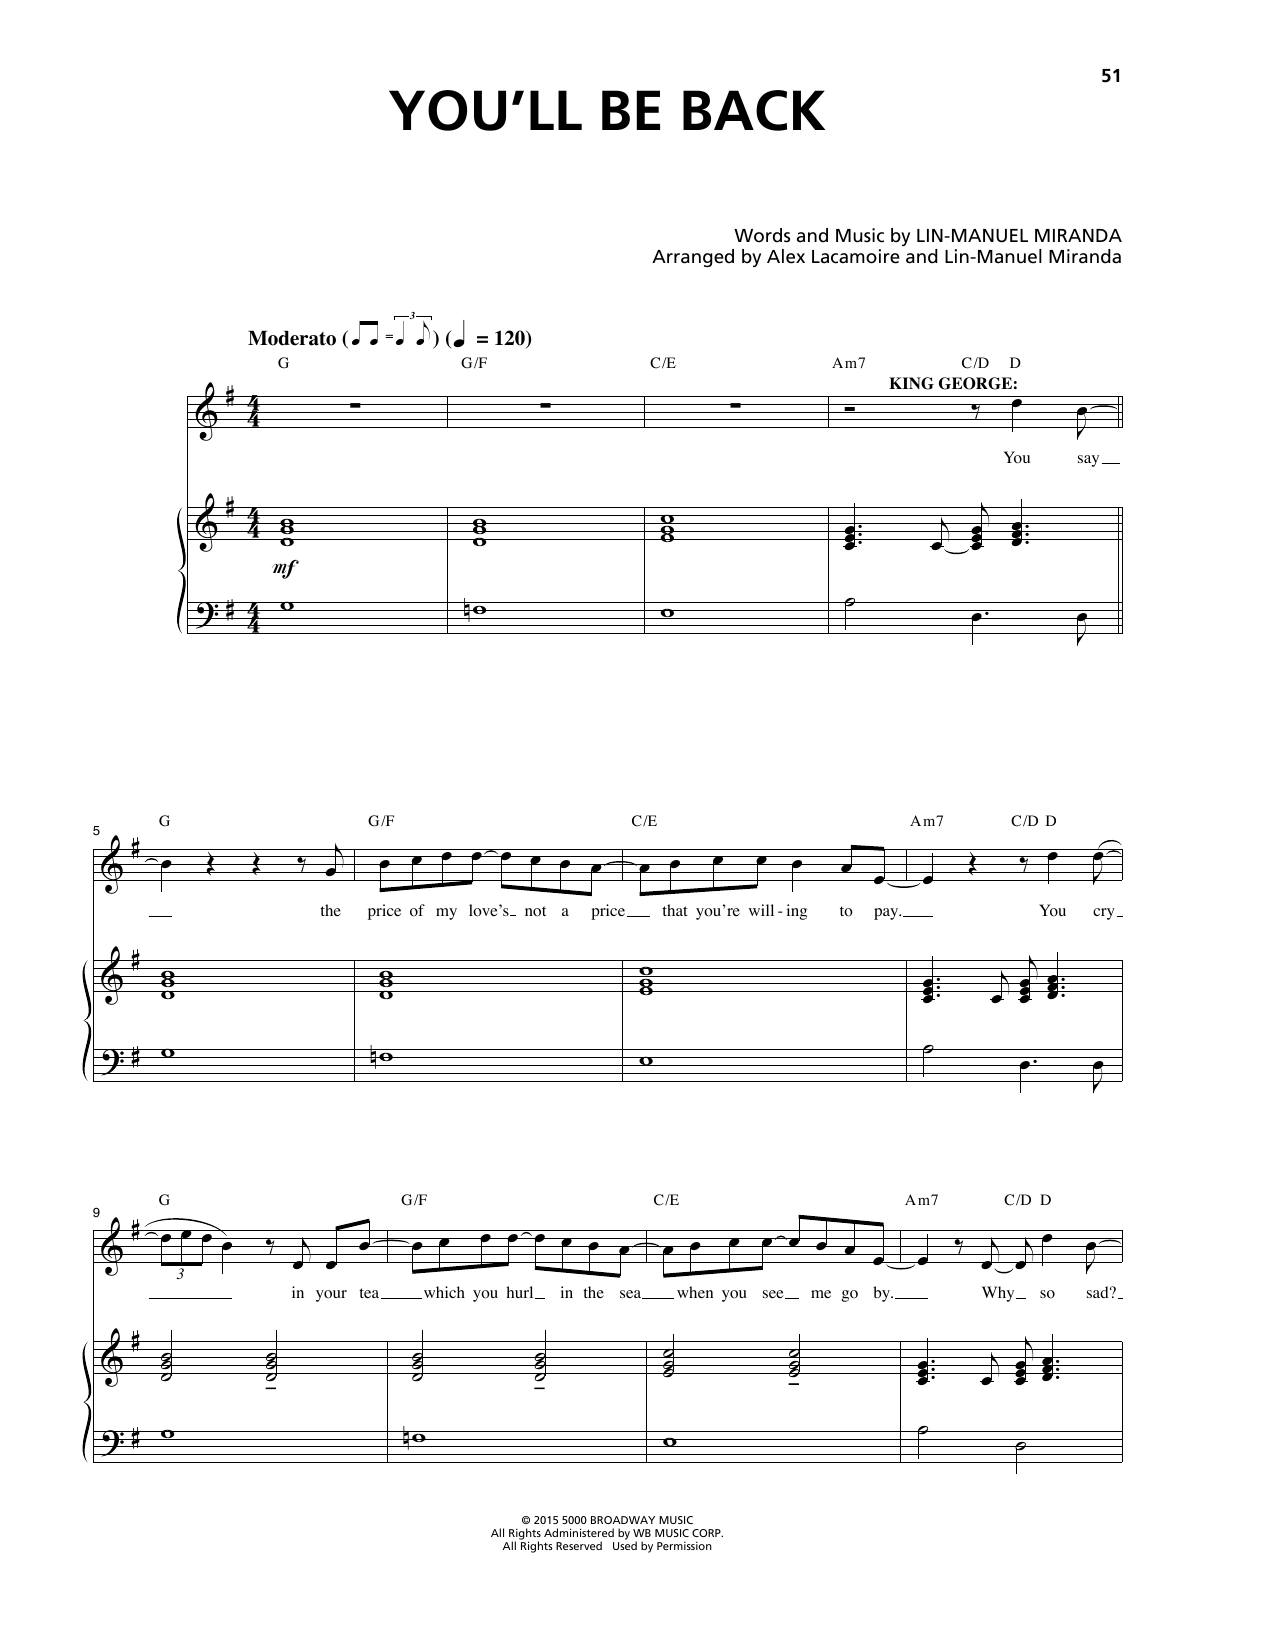 Lin-Manuel Miranda You'll Be Back (from Hamilton) Sheet Music Notes & Chords for Lyrics & Chords - Download or Print PDF